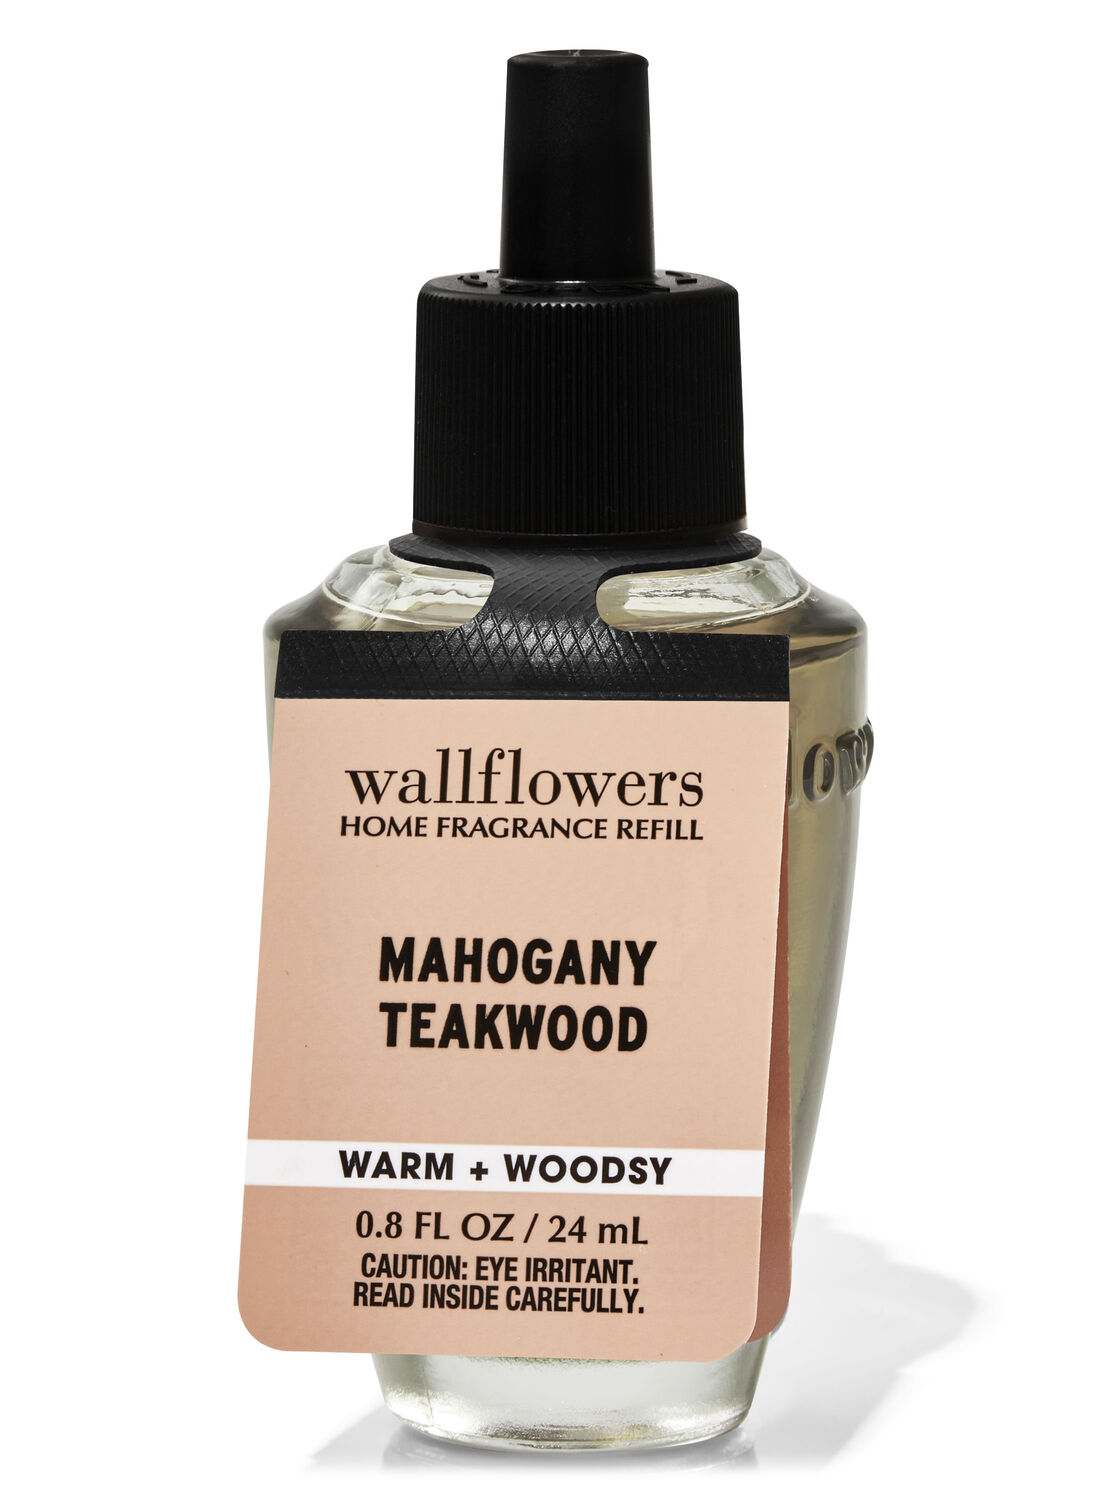  Bath & Body Works MAHOGANY TEAKWOOD 6-Pack Wallflowers